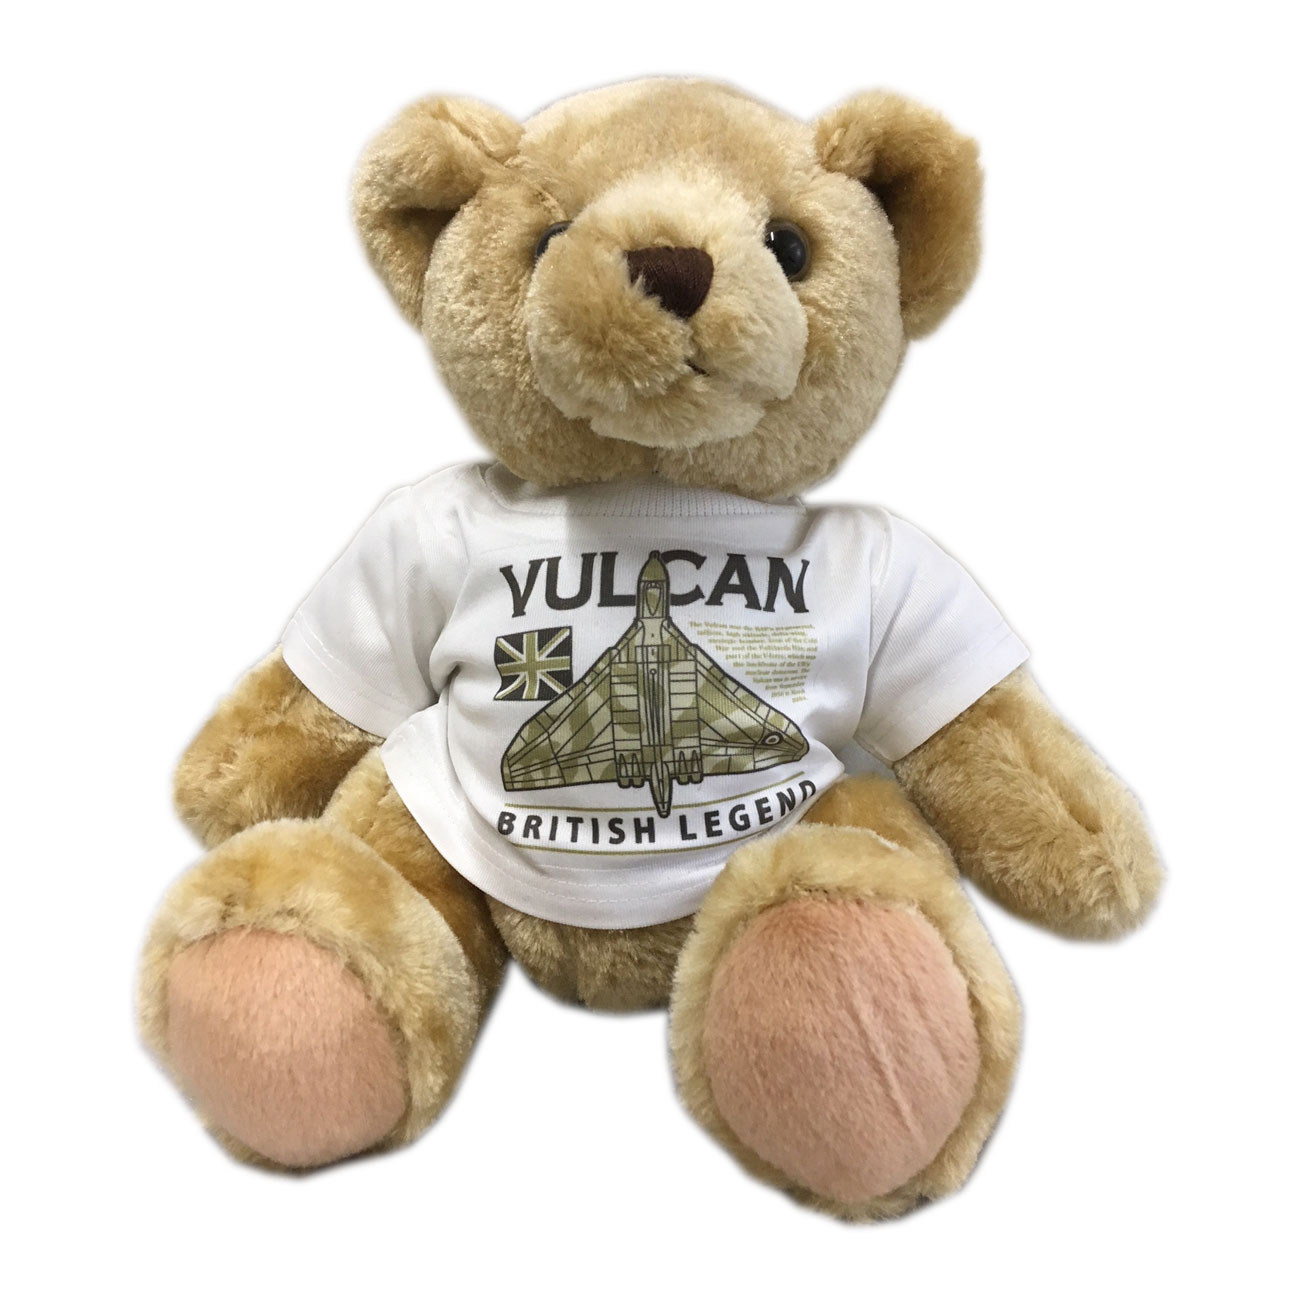 Vulcan Teddy.jpg